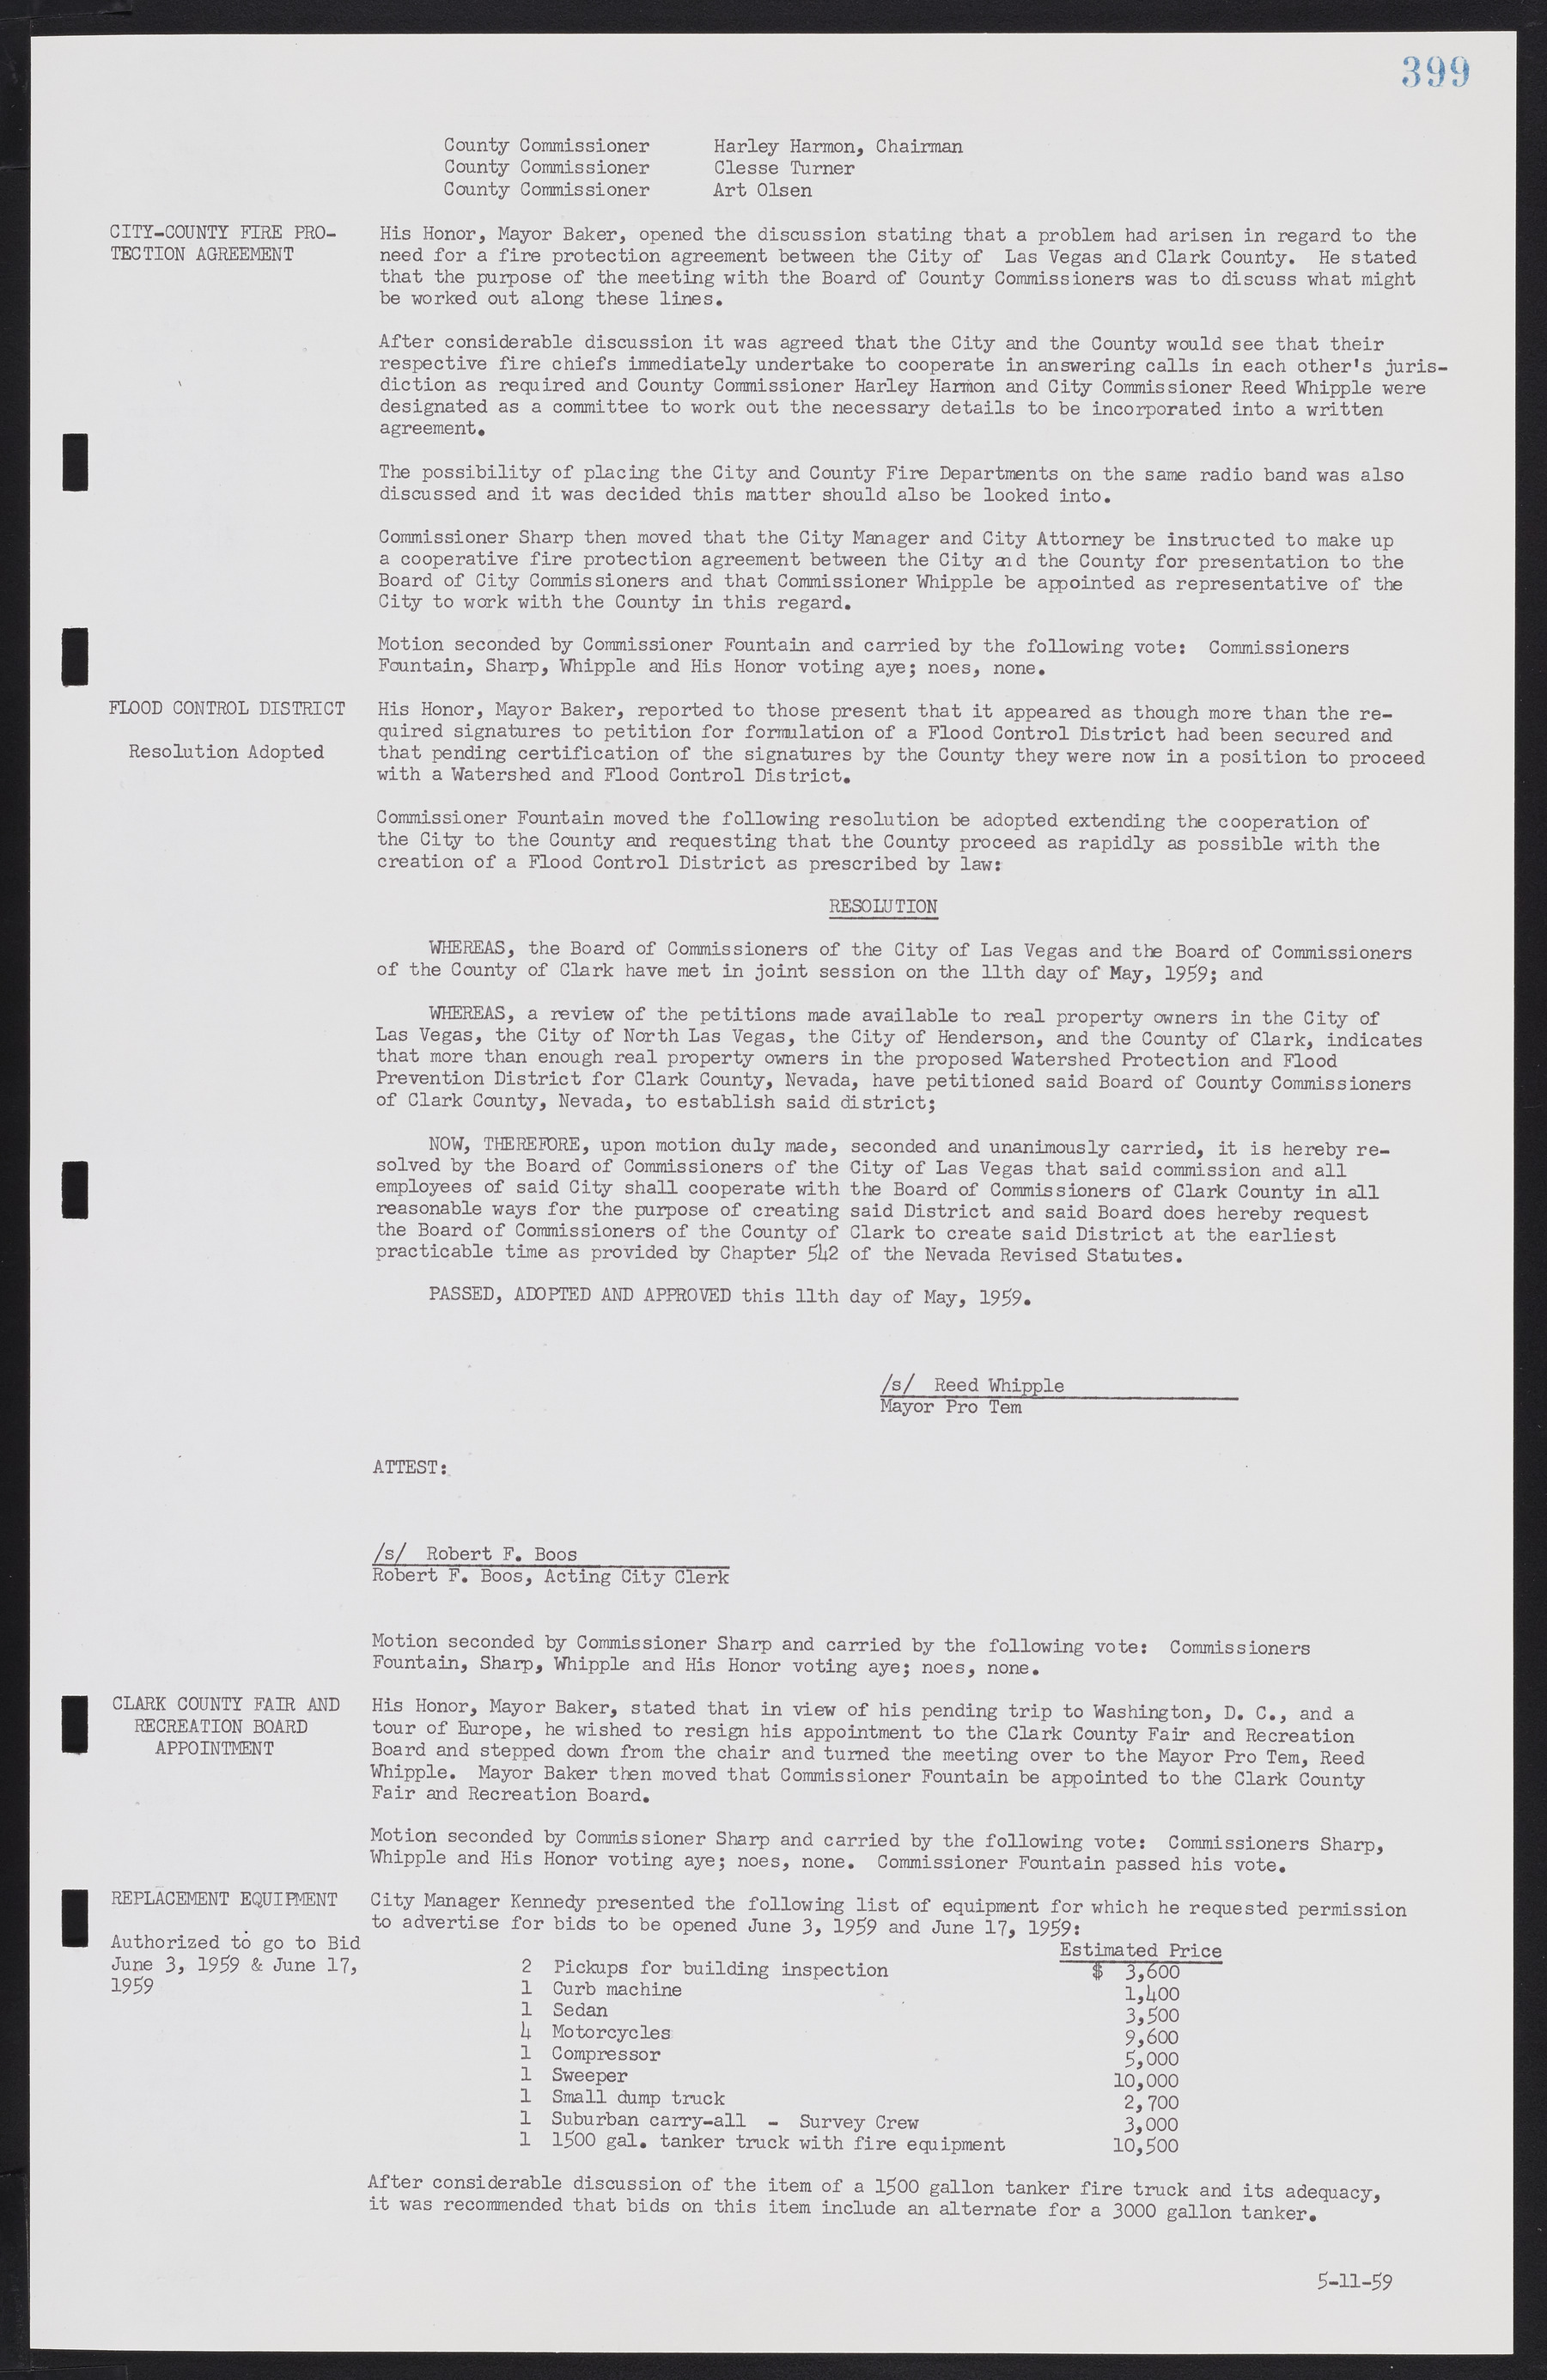 Las Vegas City Commission Minutes, November 20, 1957 to December 2, 1959, lvc000011-435